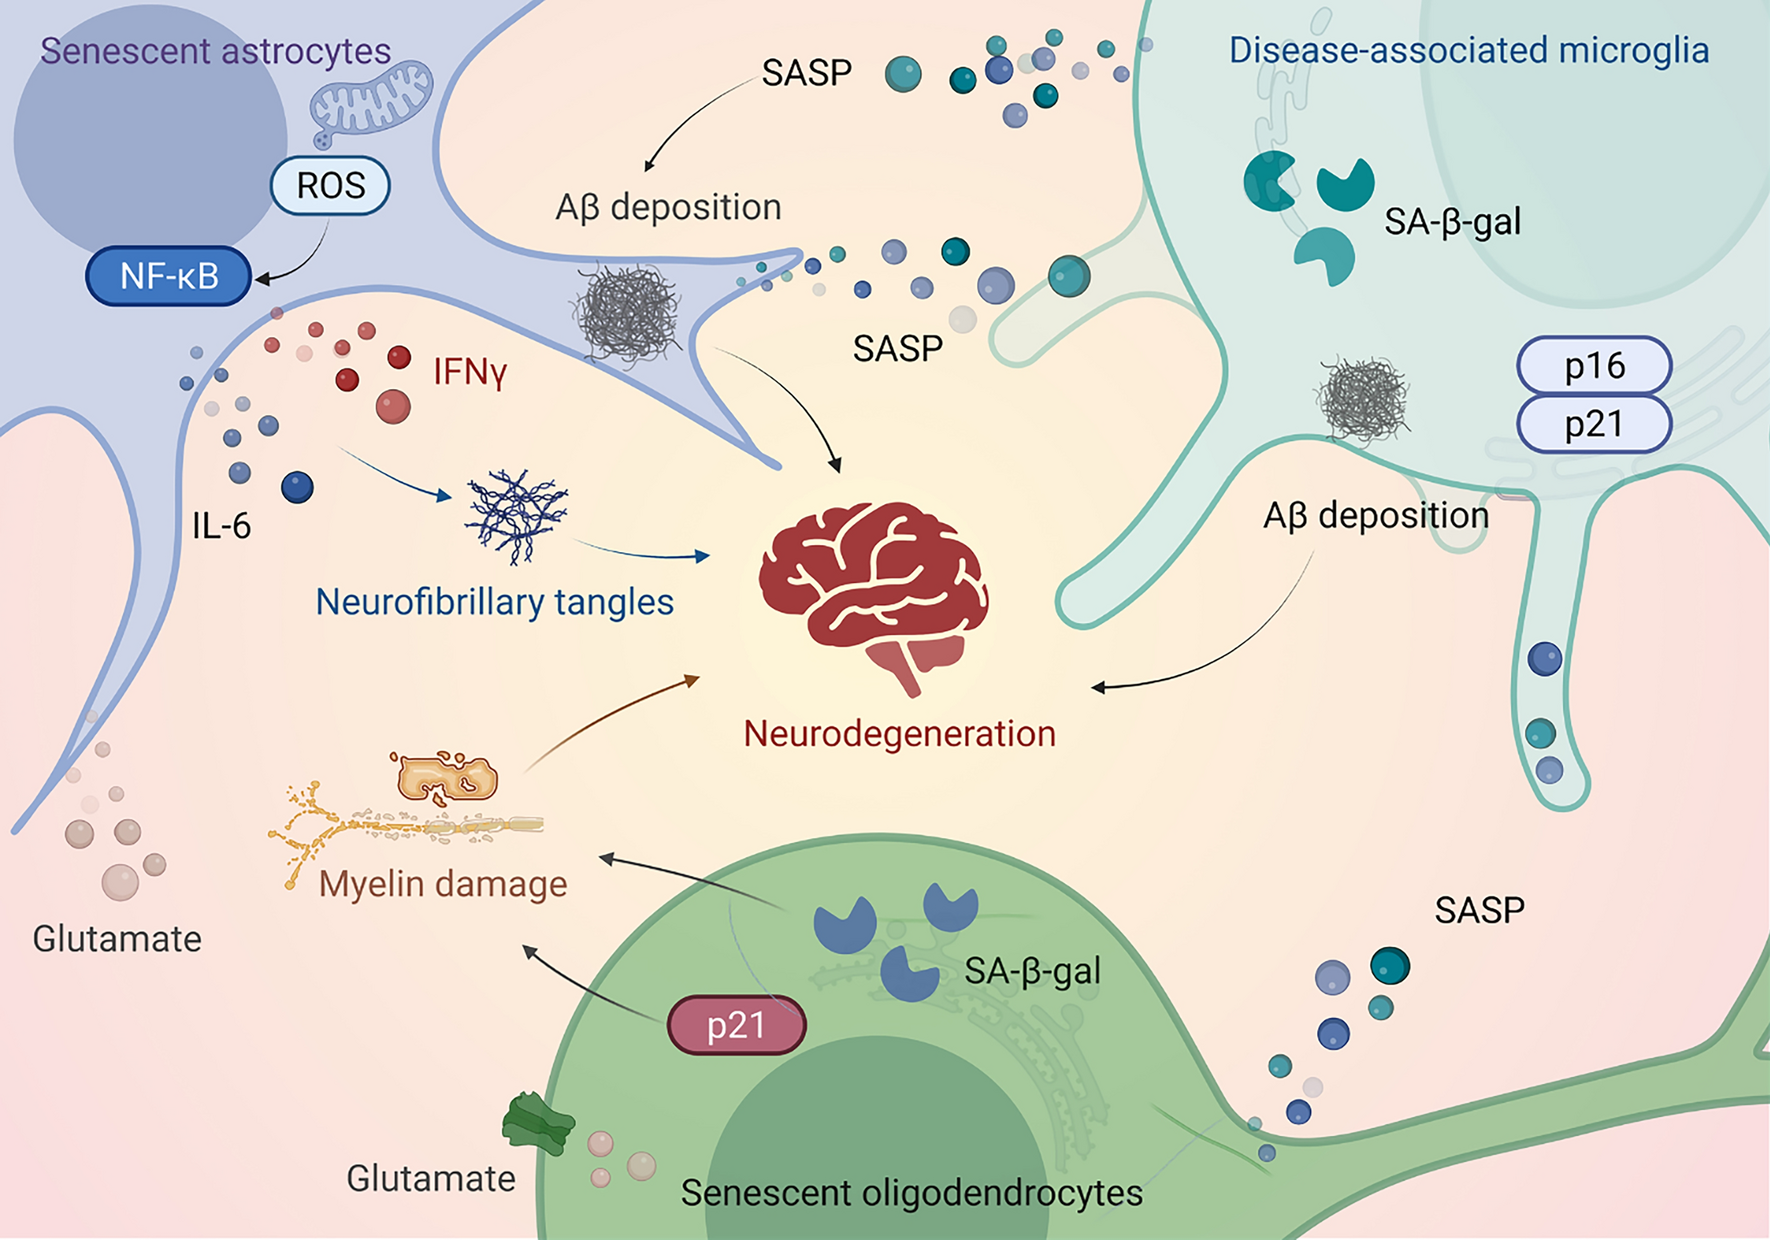 The role of cellular senescence in neurodegenerative diseases